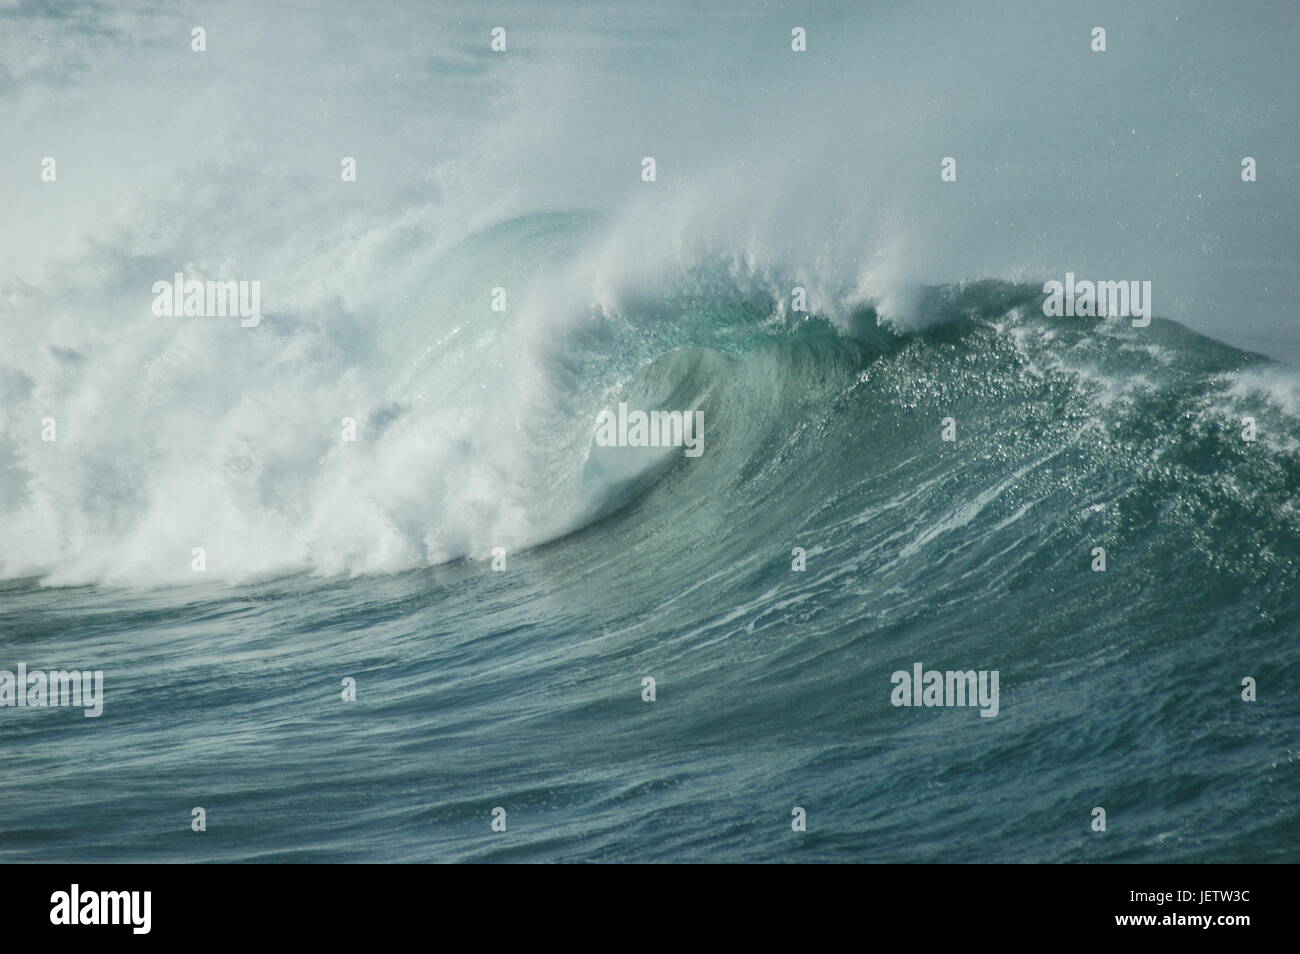 Surfs up on cornish beach wave barrel Stock Photo